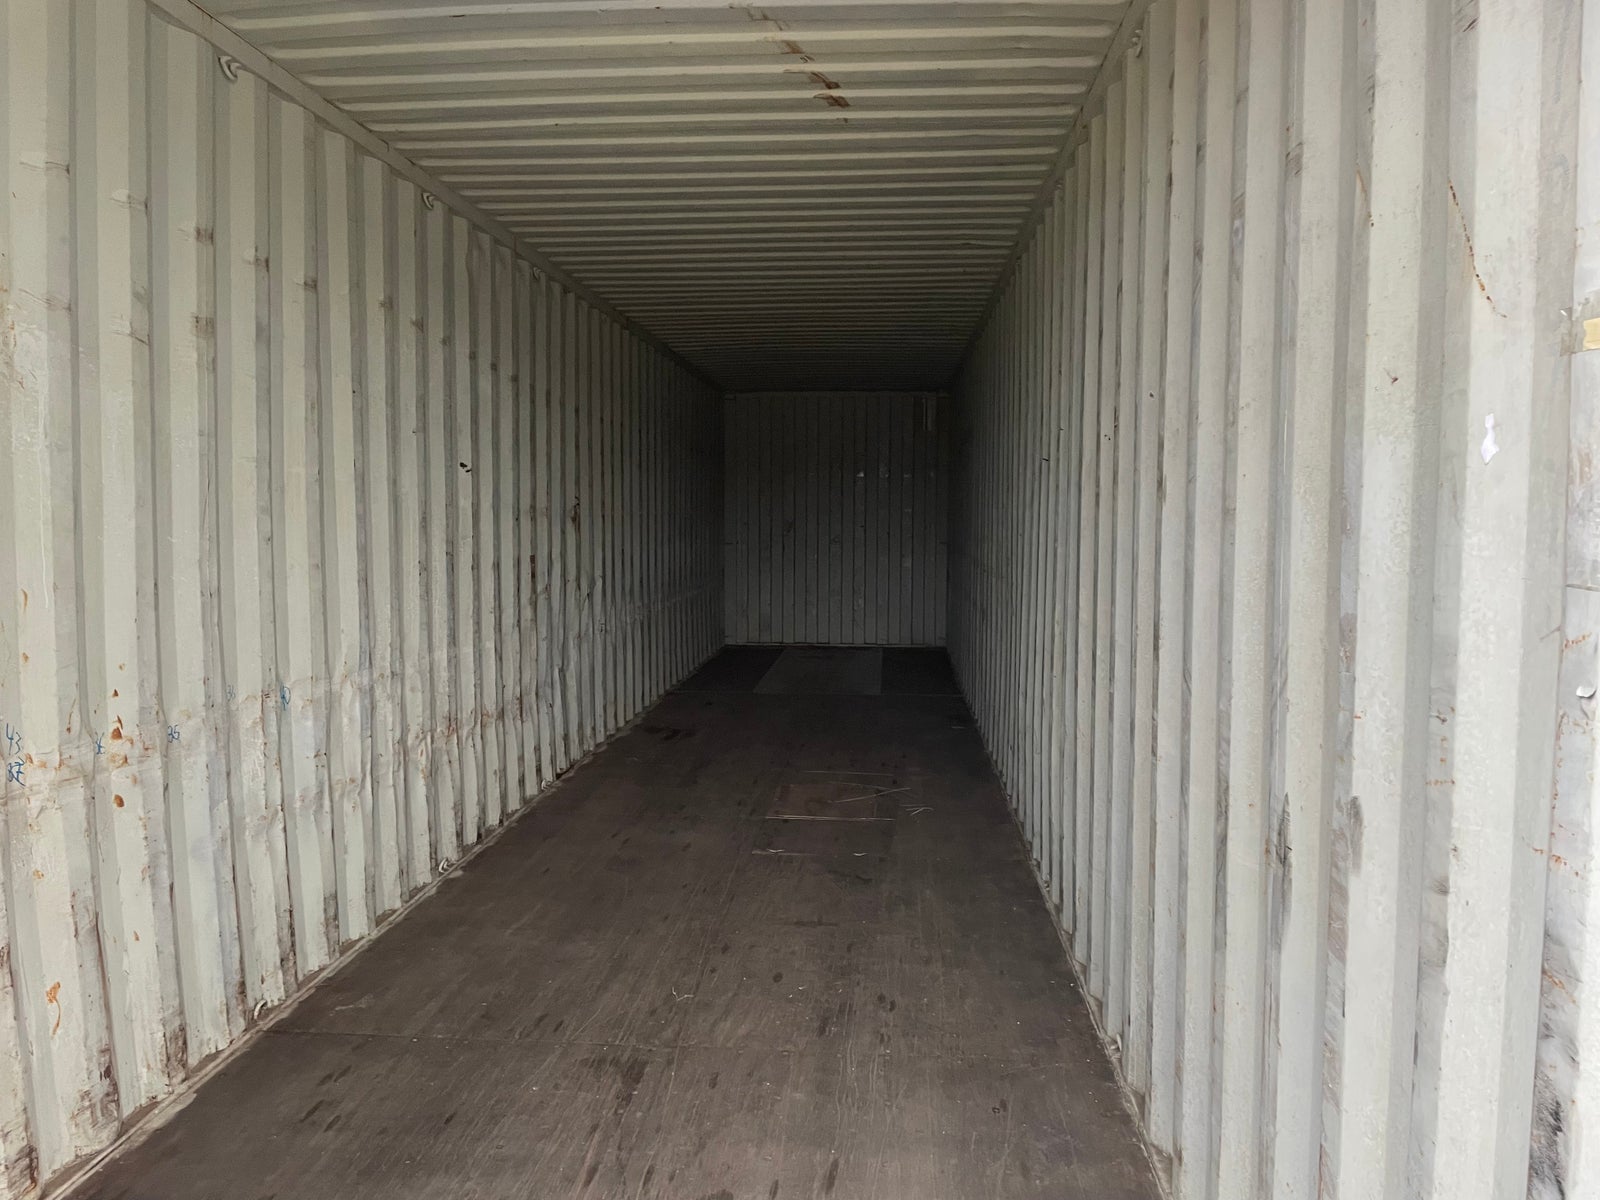 40 fods HC Container - ID: TRLU763709-2